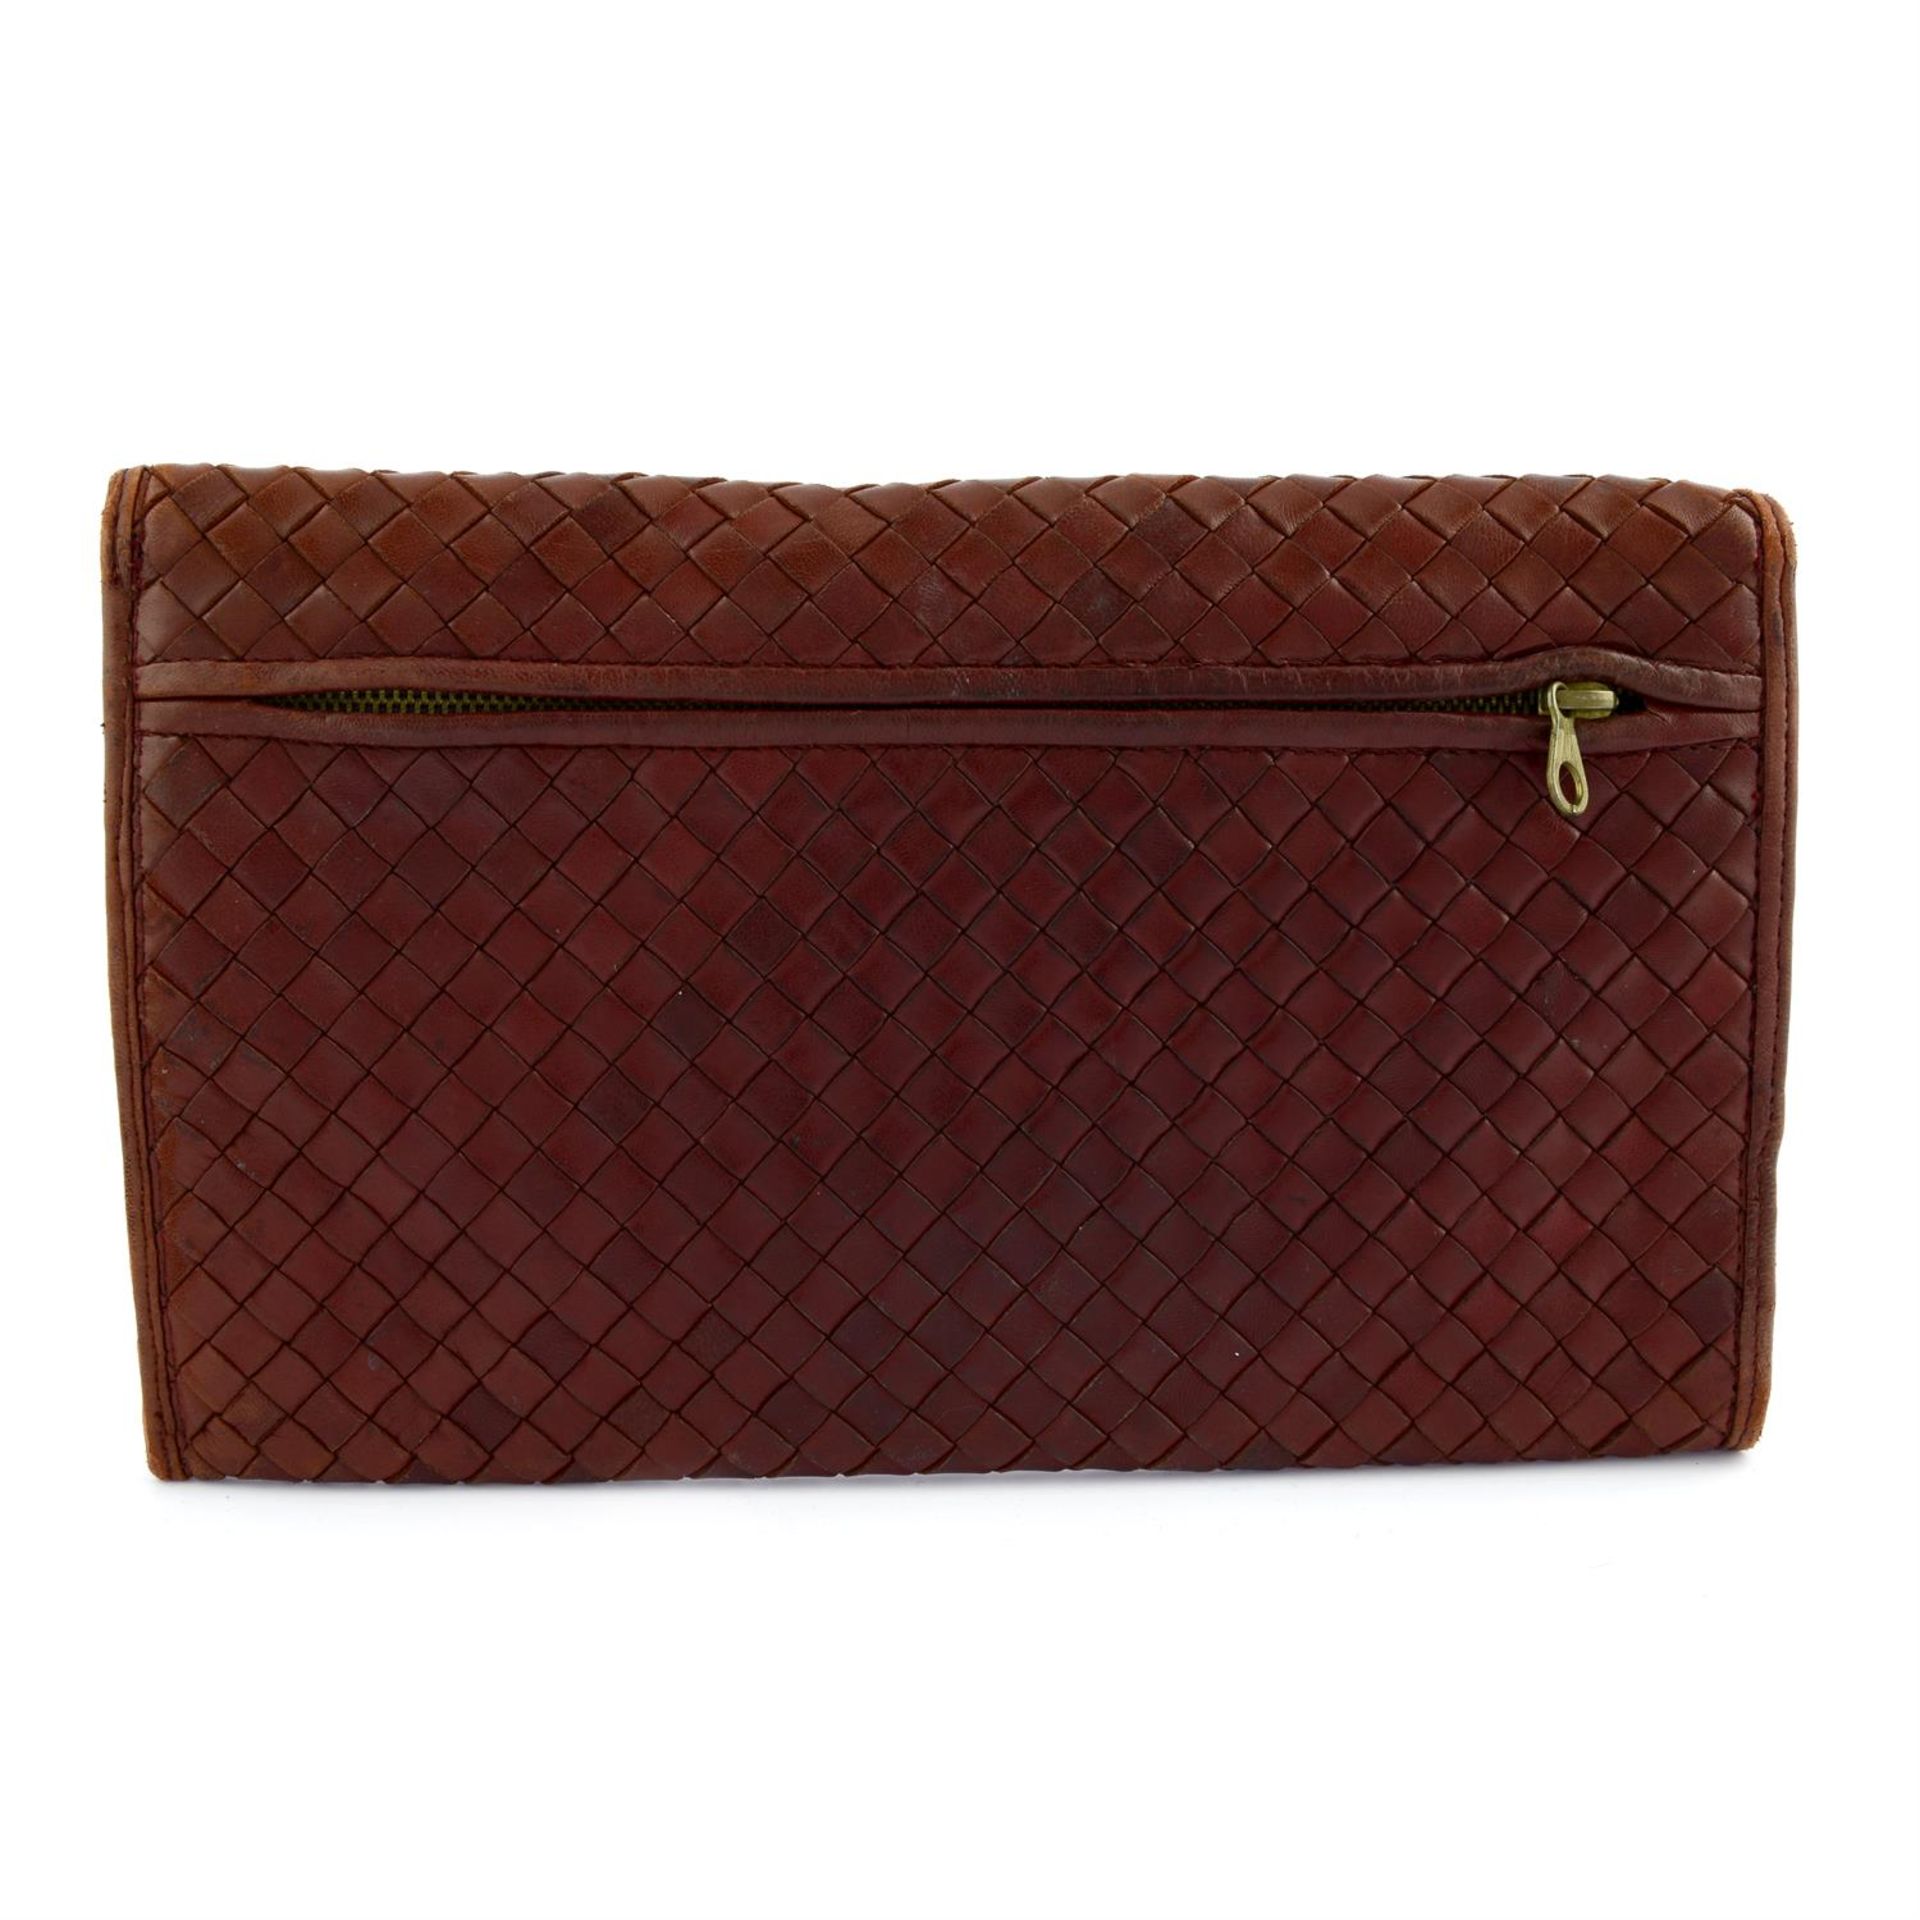 BOTTEGA VENETA - a brown leather clutch bag. - Image 2 of 4